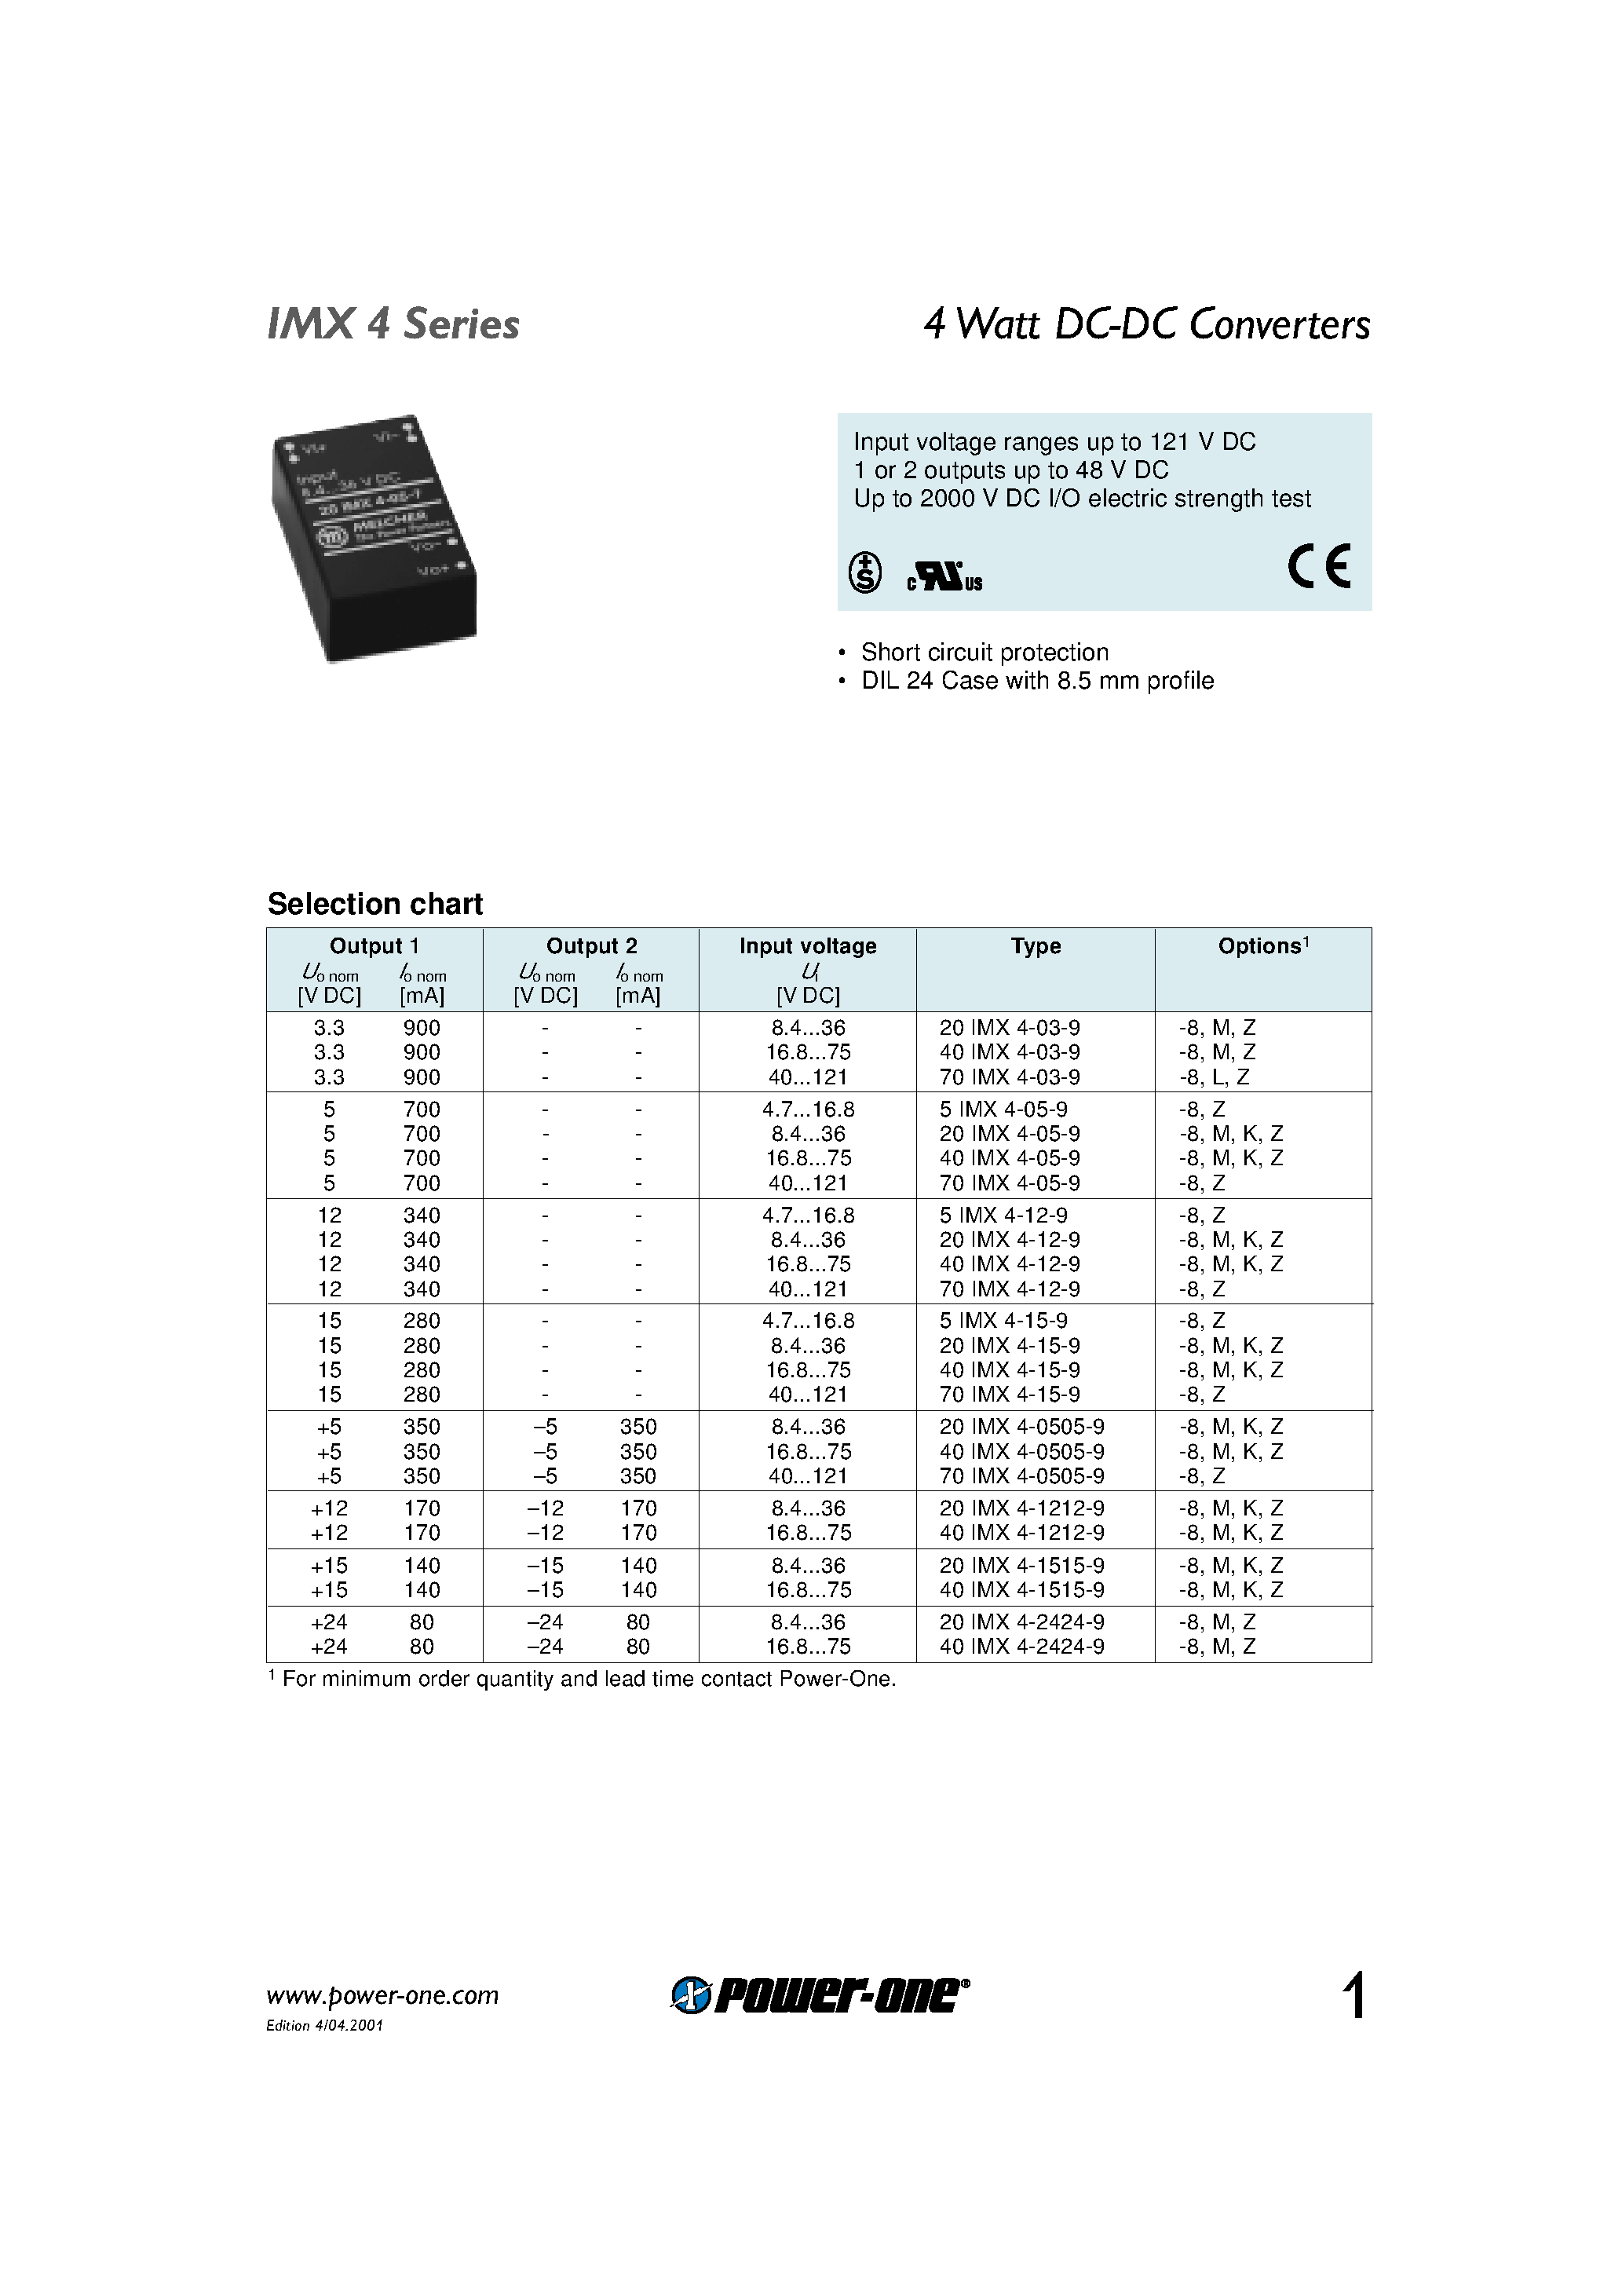 Даташит 40IMX4-05-9 - 4 Watt DC-DC Converters страница 1